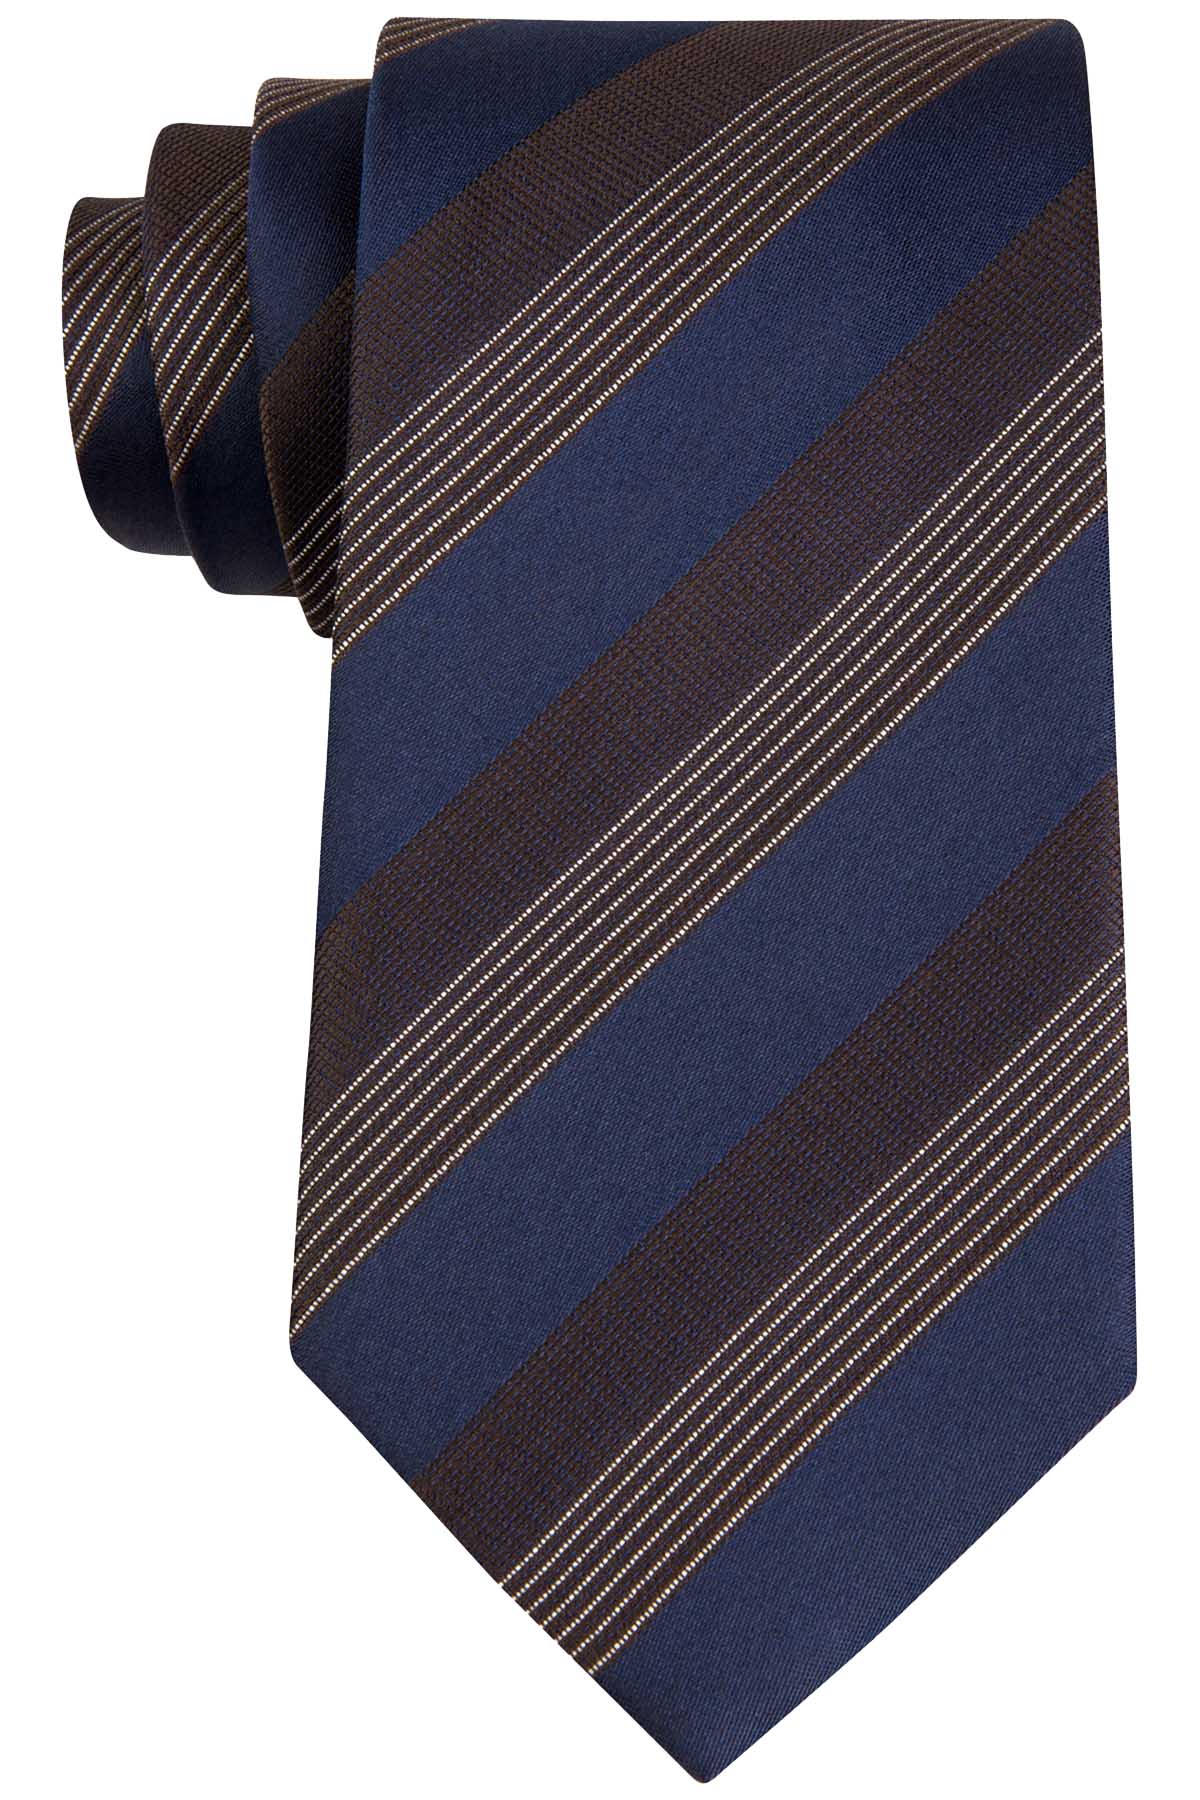 Kenneth Cole Reaction Navy Elegant Stripe Tie